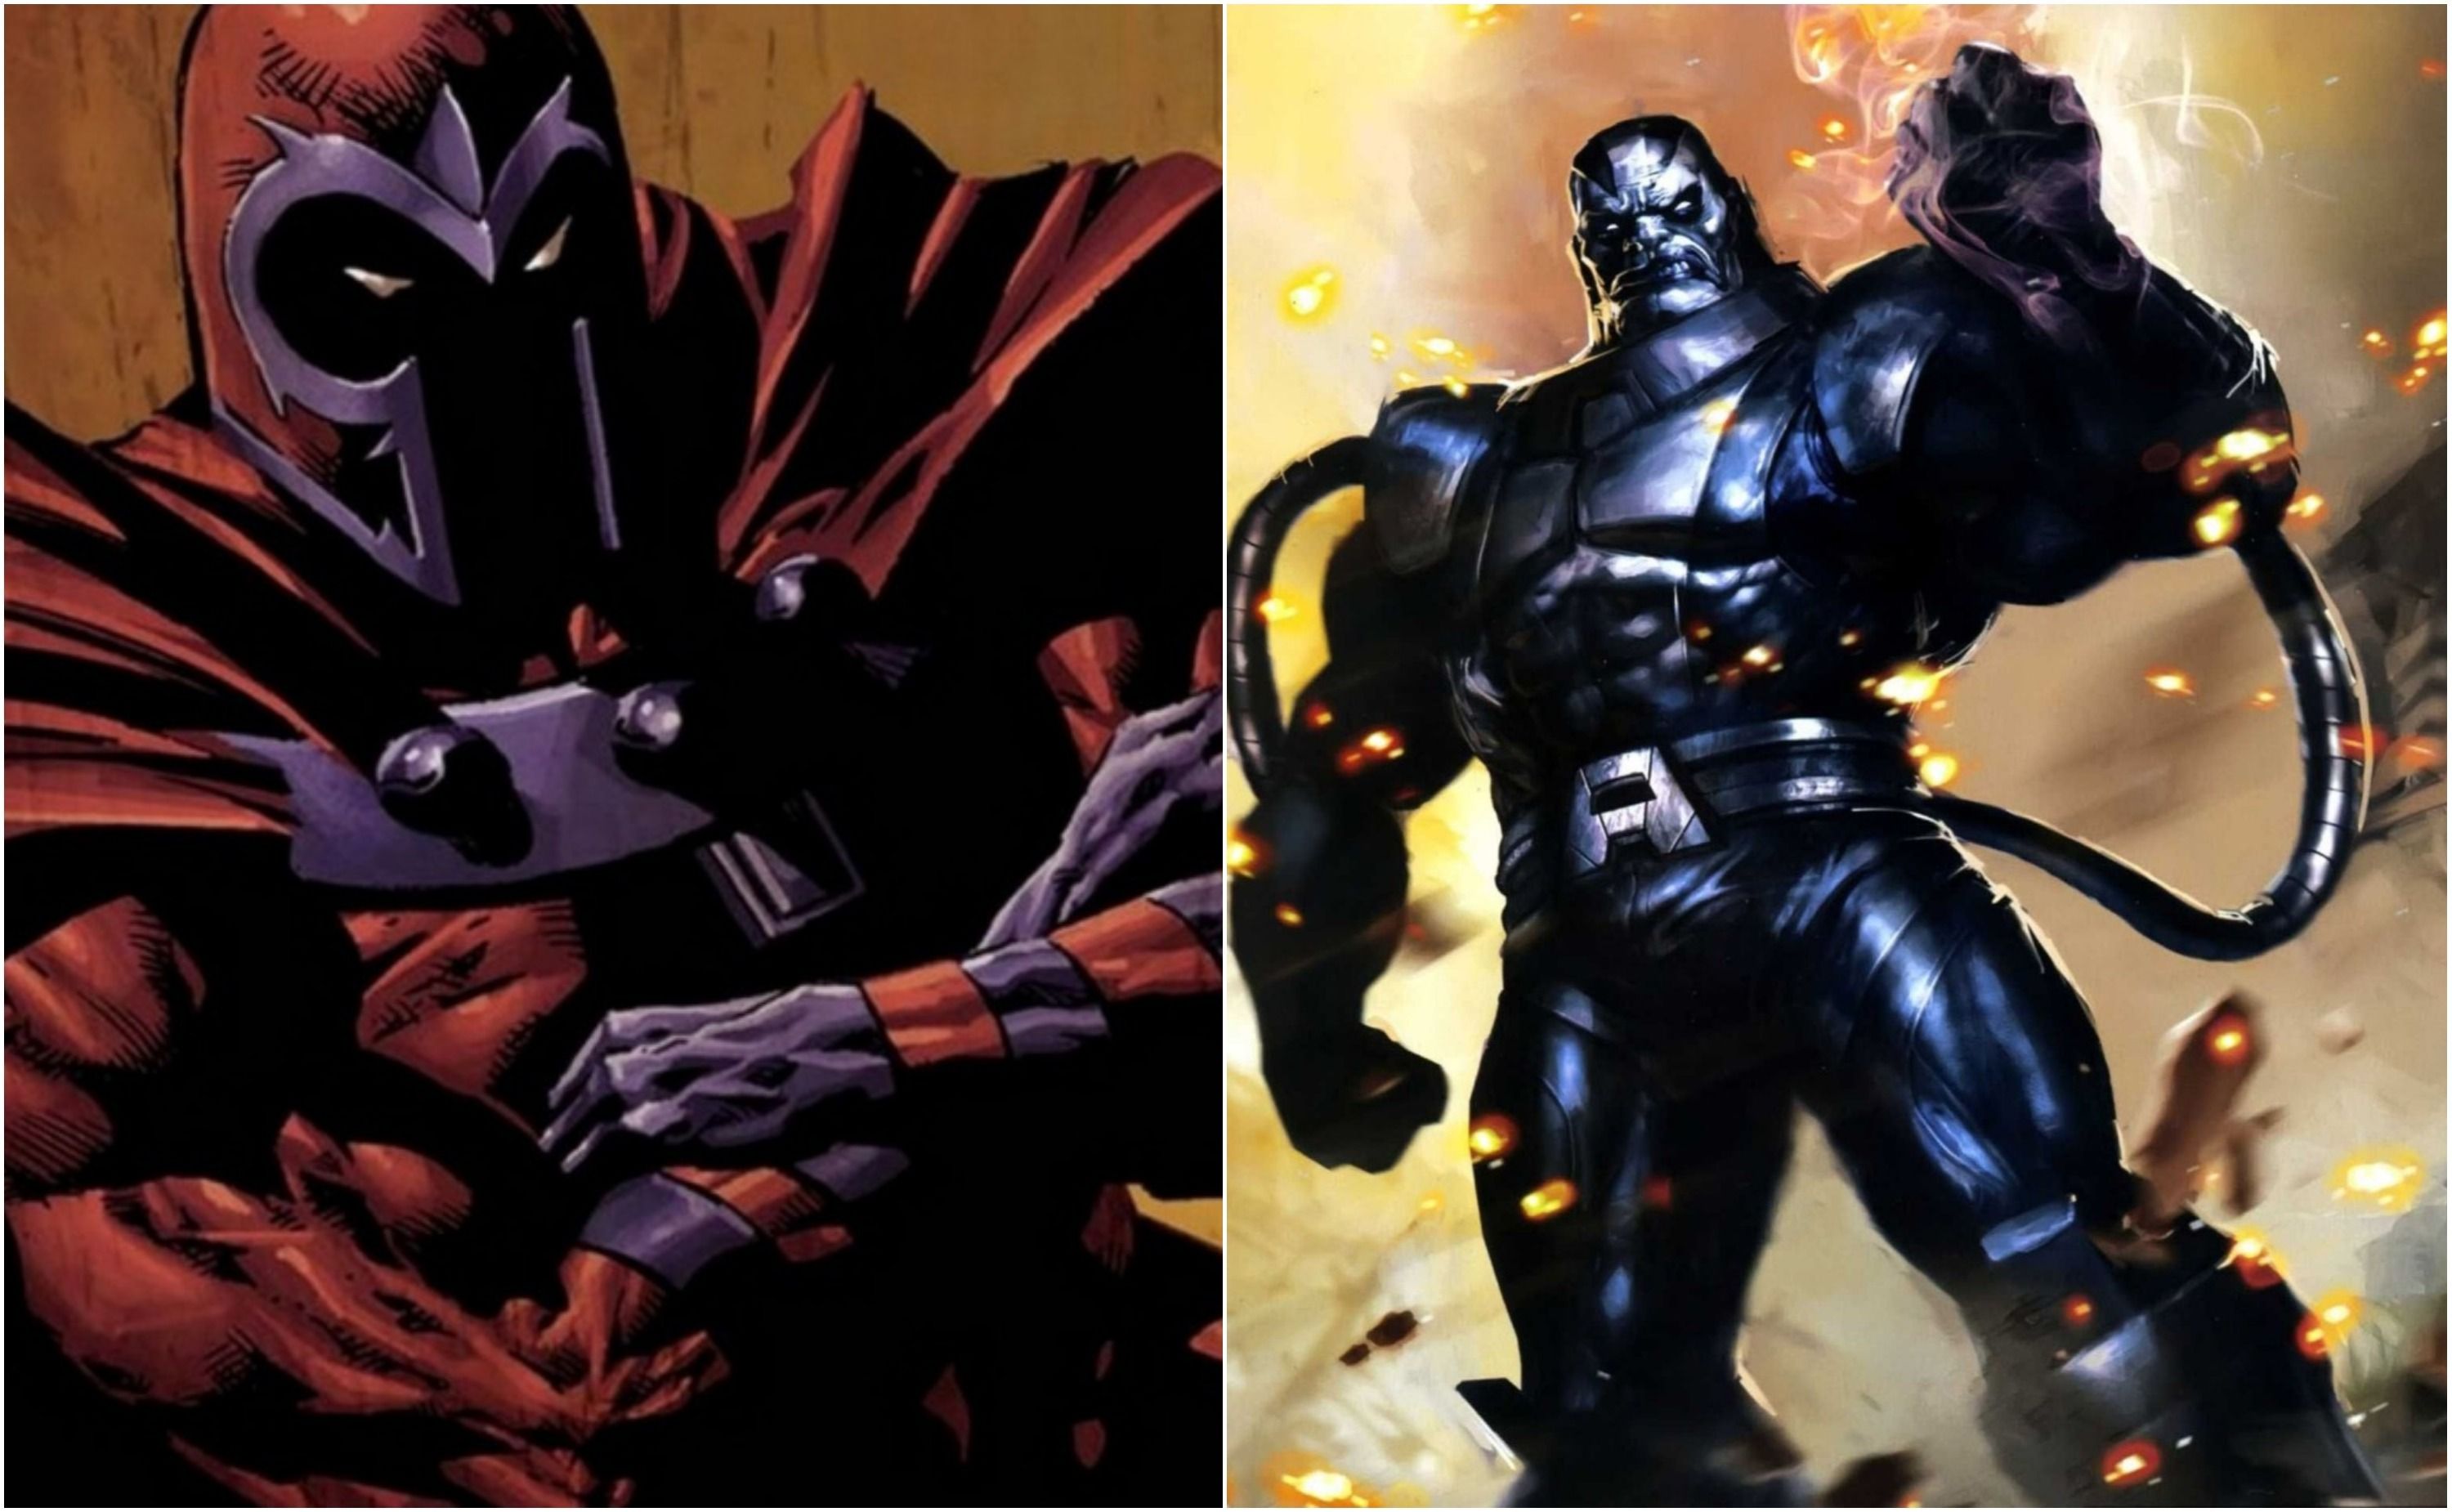 Magneto vs Apocalypse